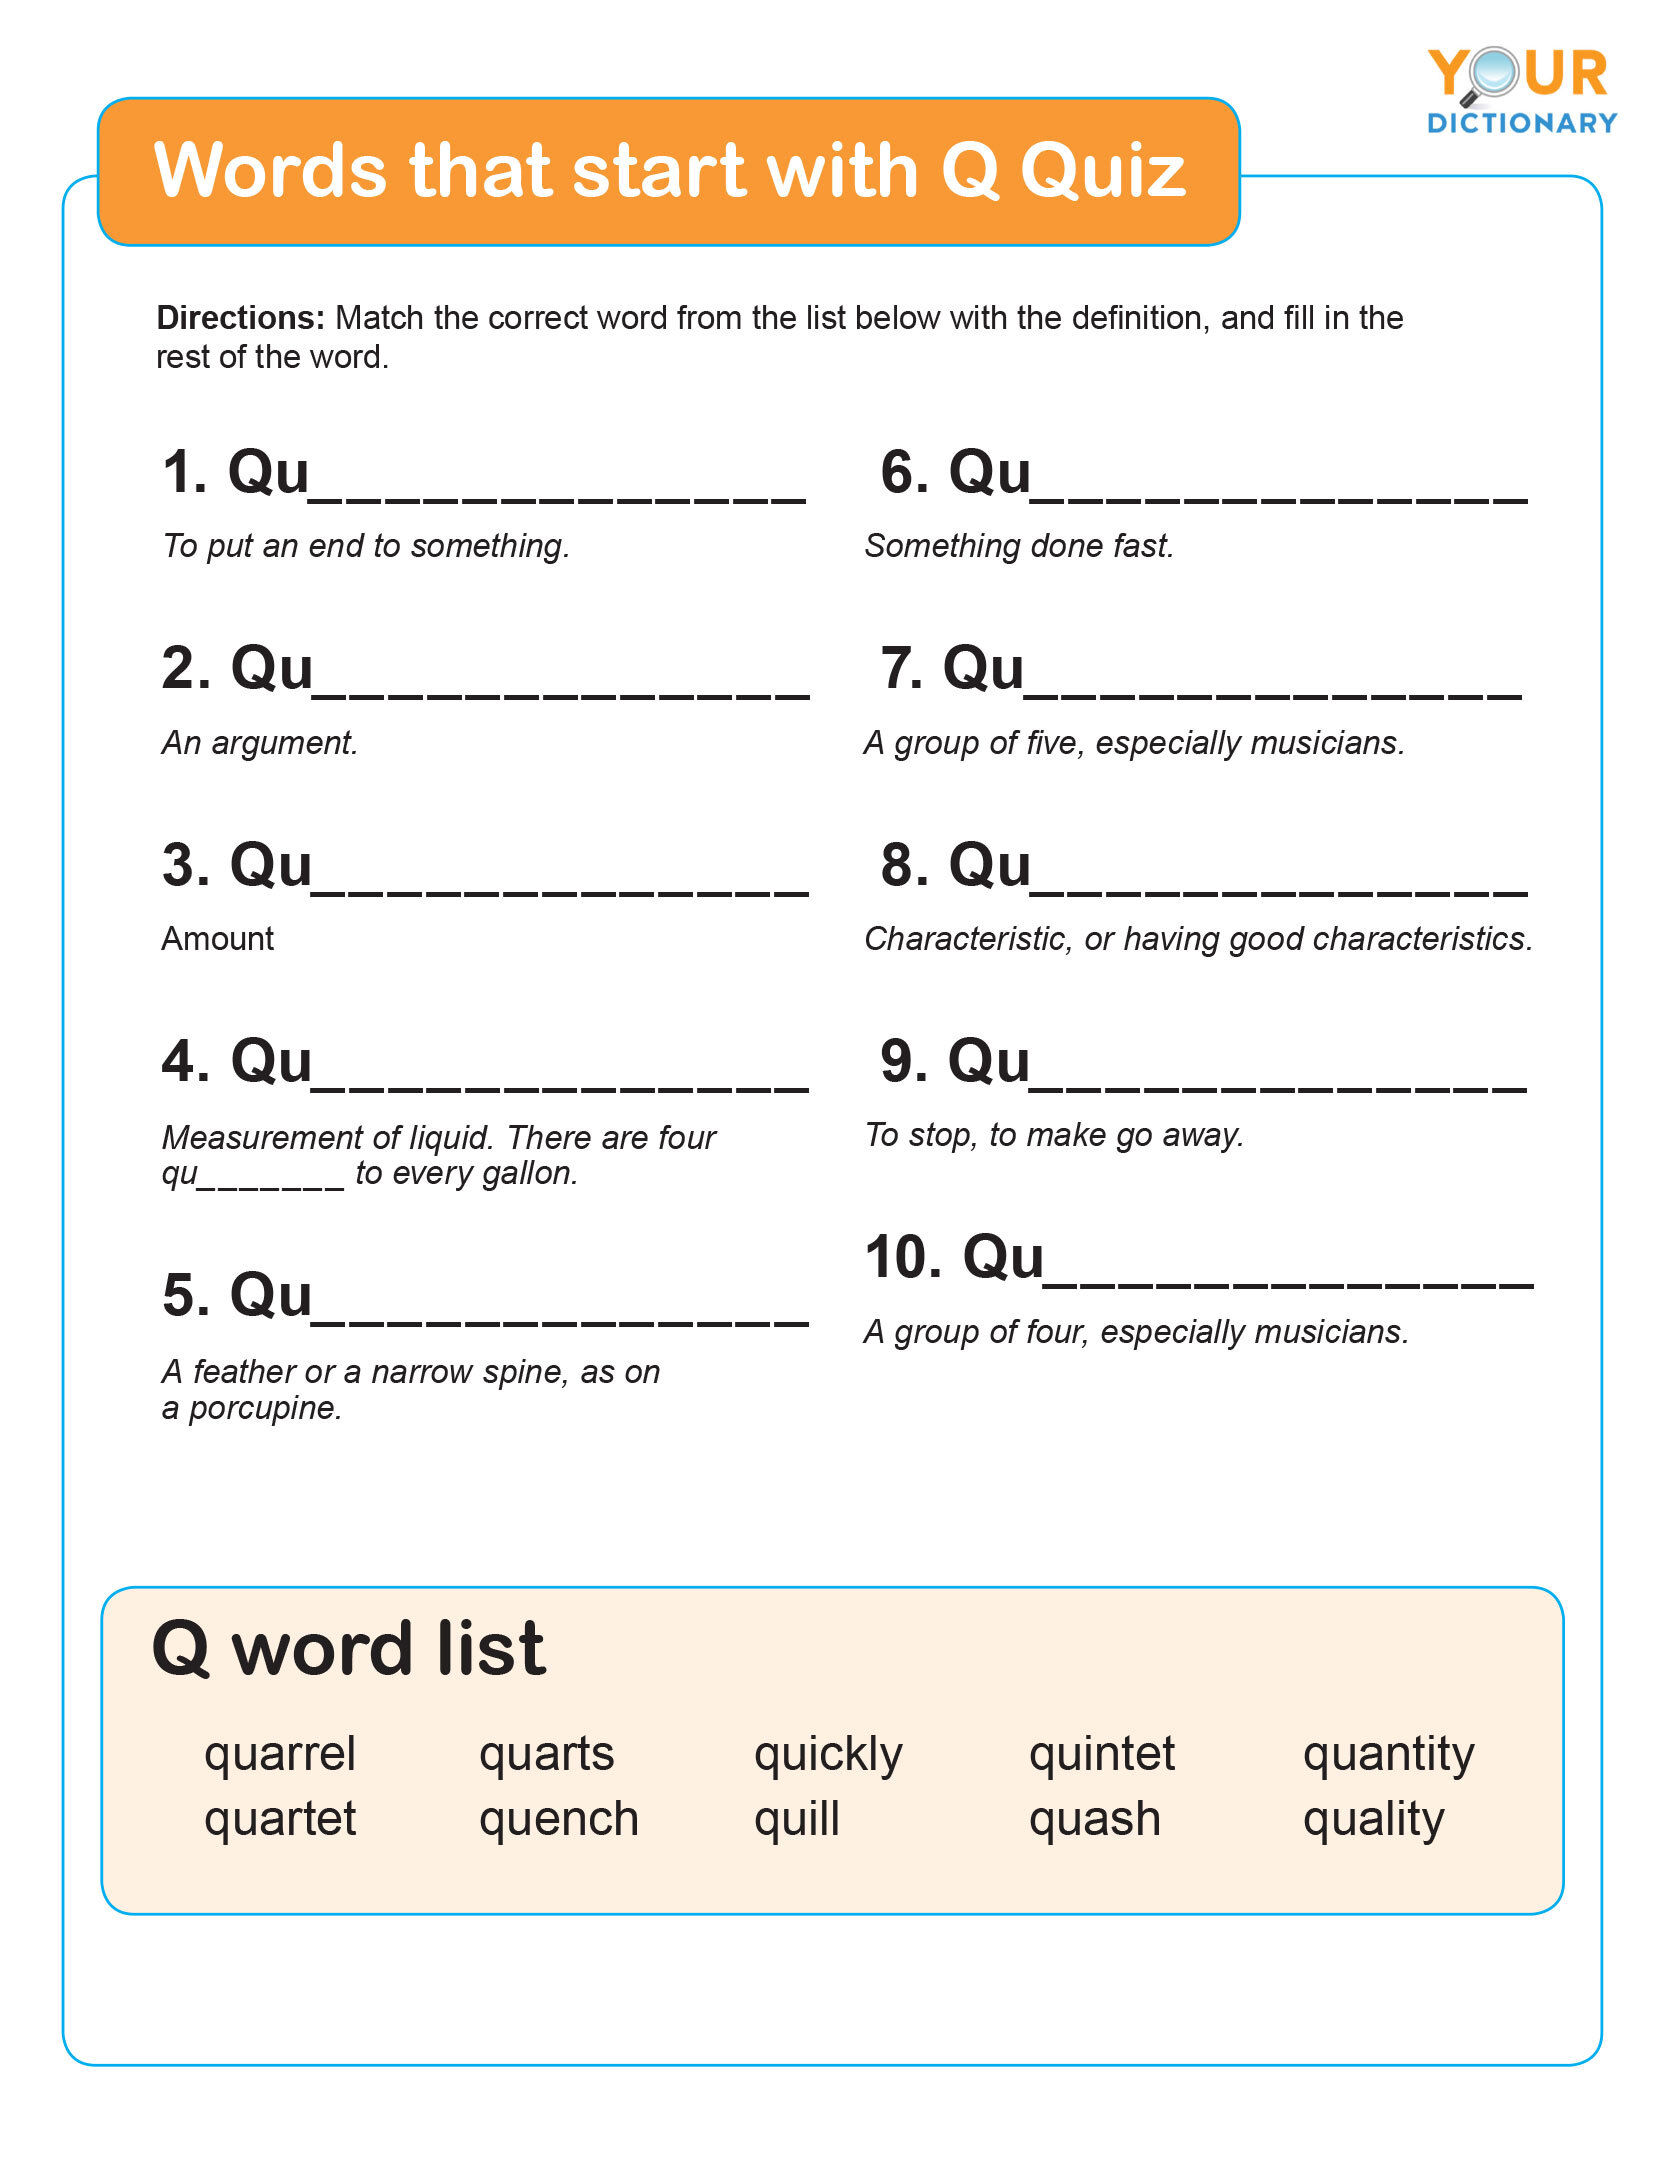 words that start with Q quiz